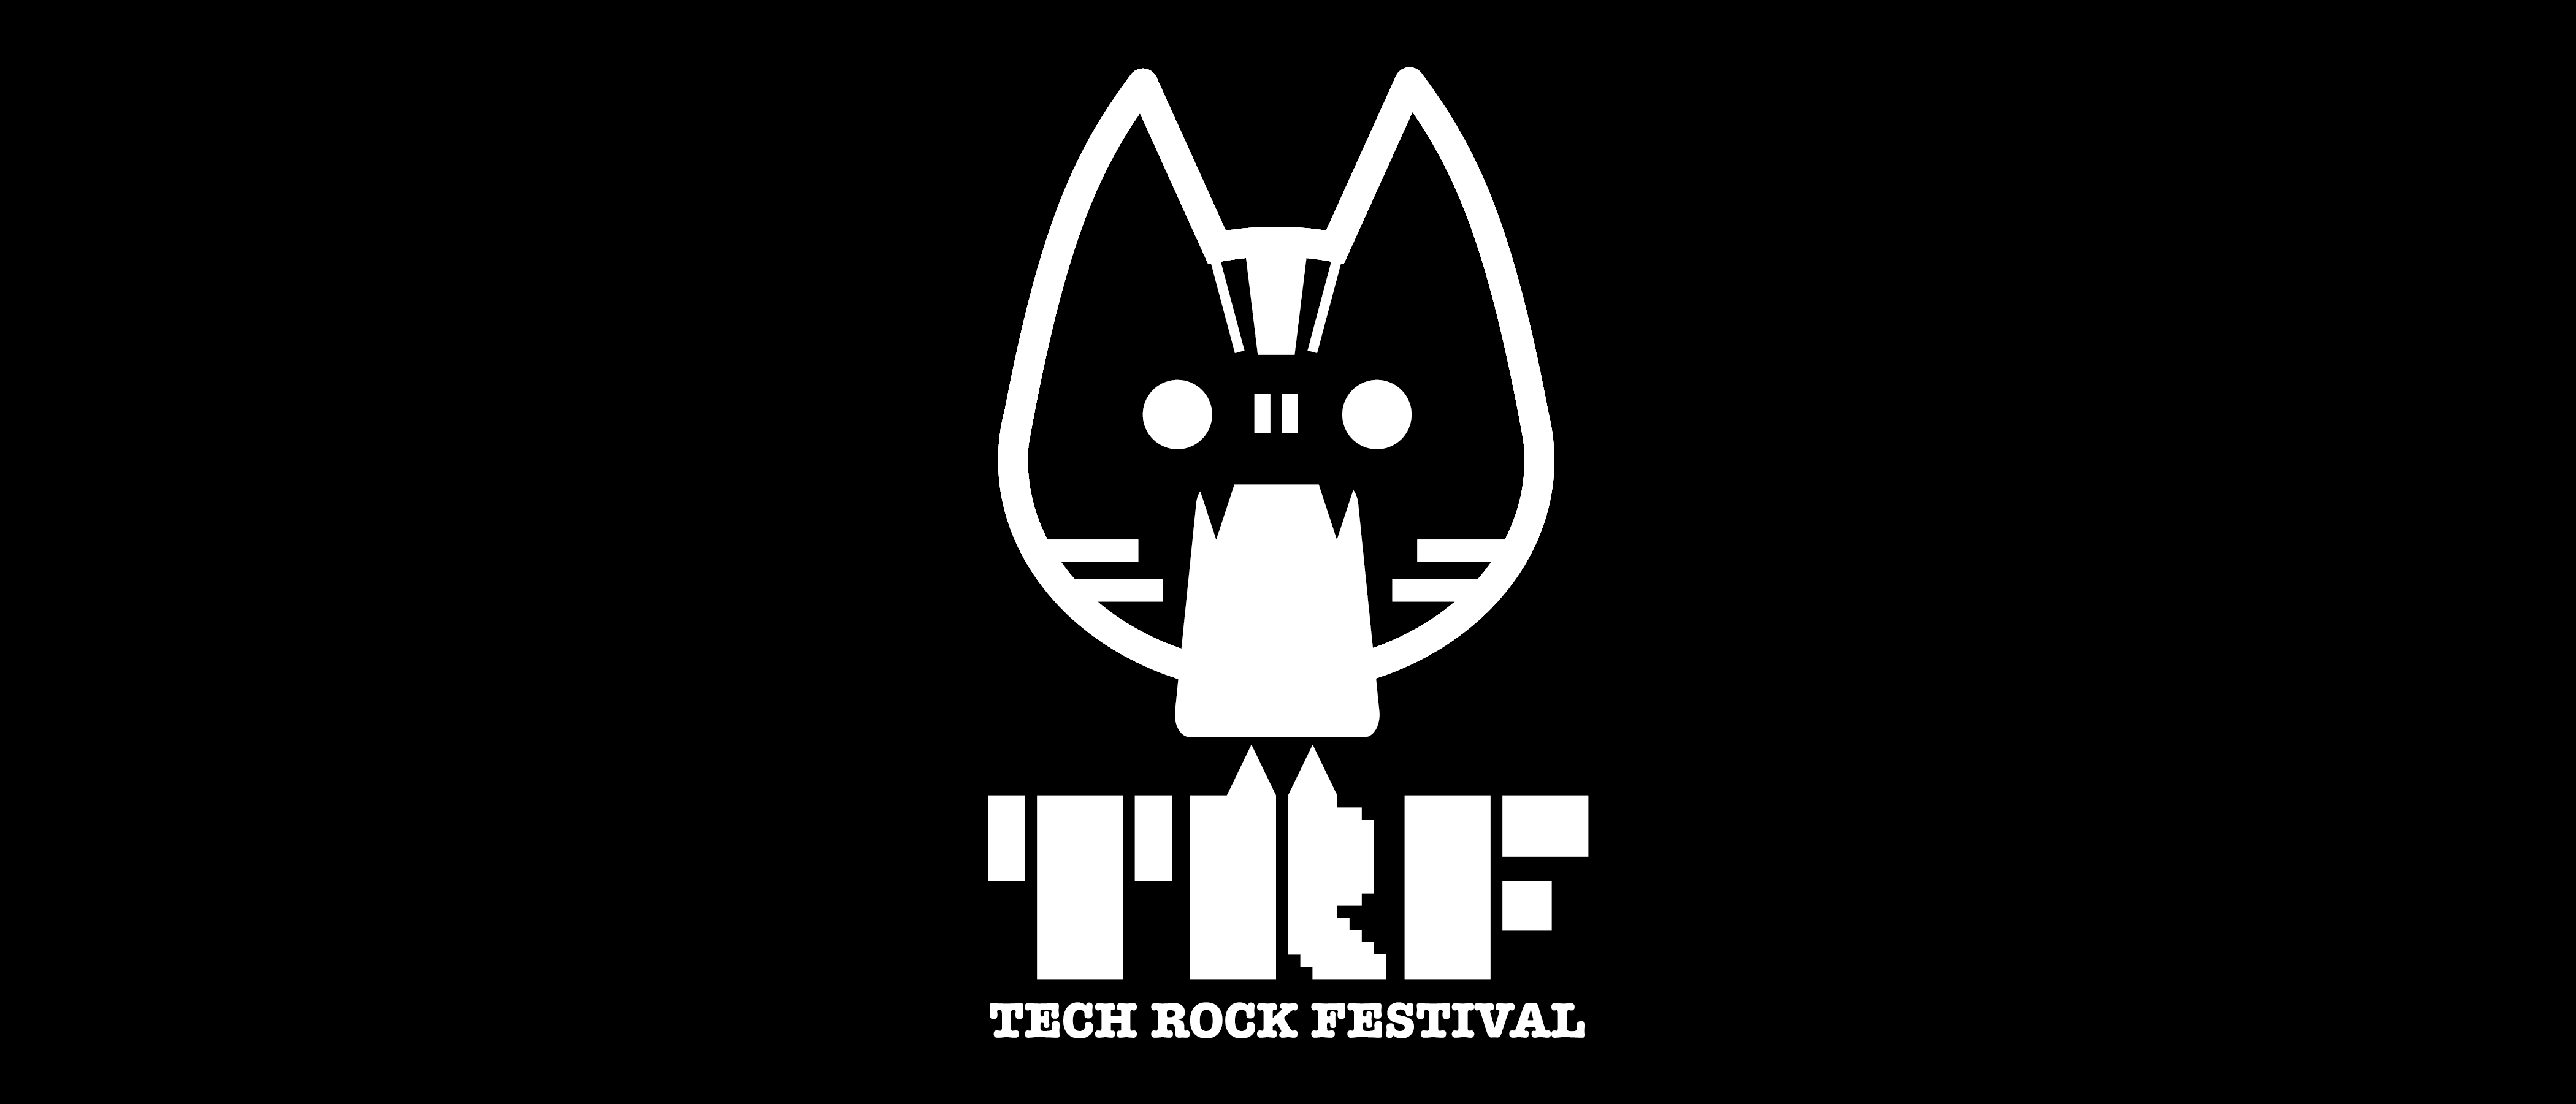 TECH x ROCK Festival Logo Design